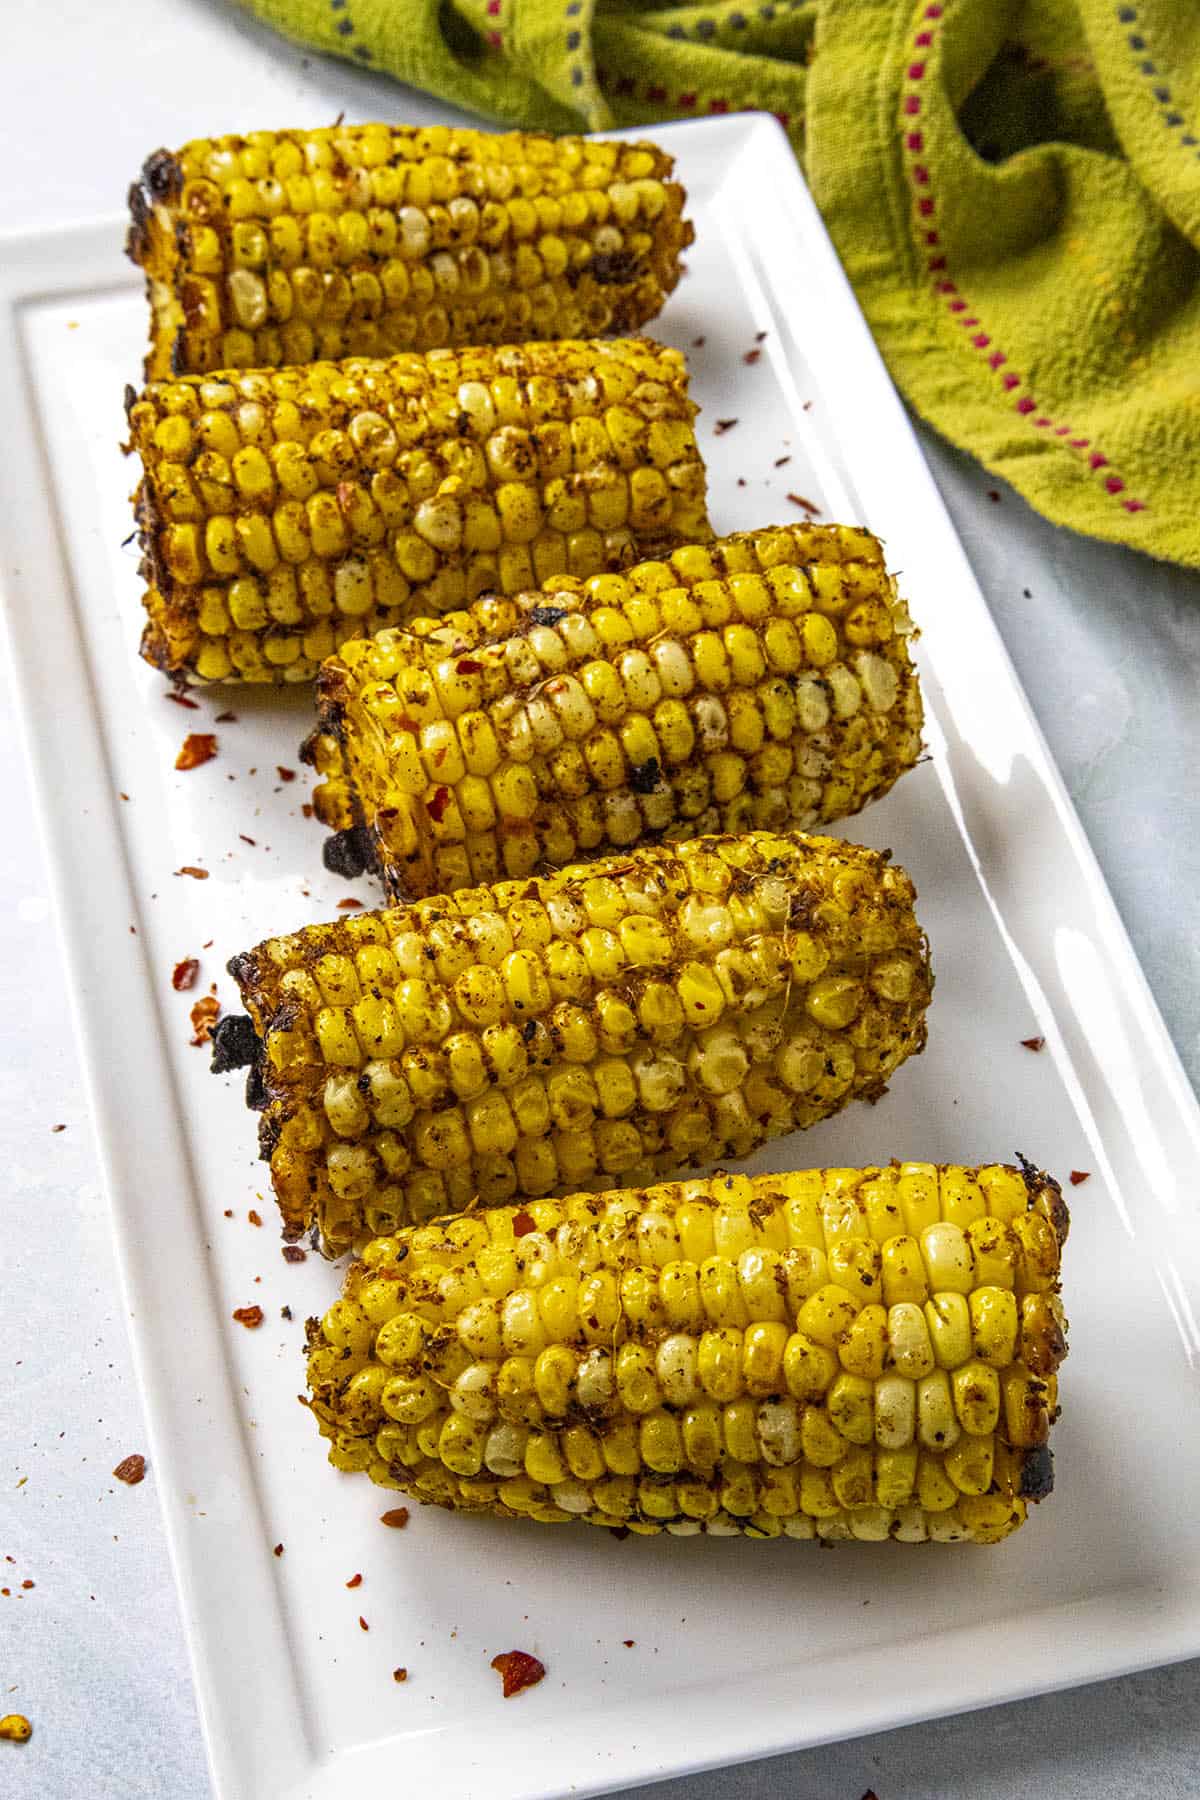 Grilled corn on the cob with plenty of jerk seasonings